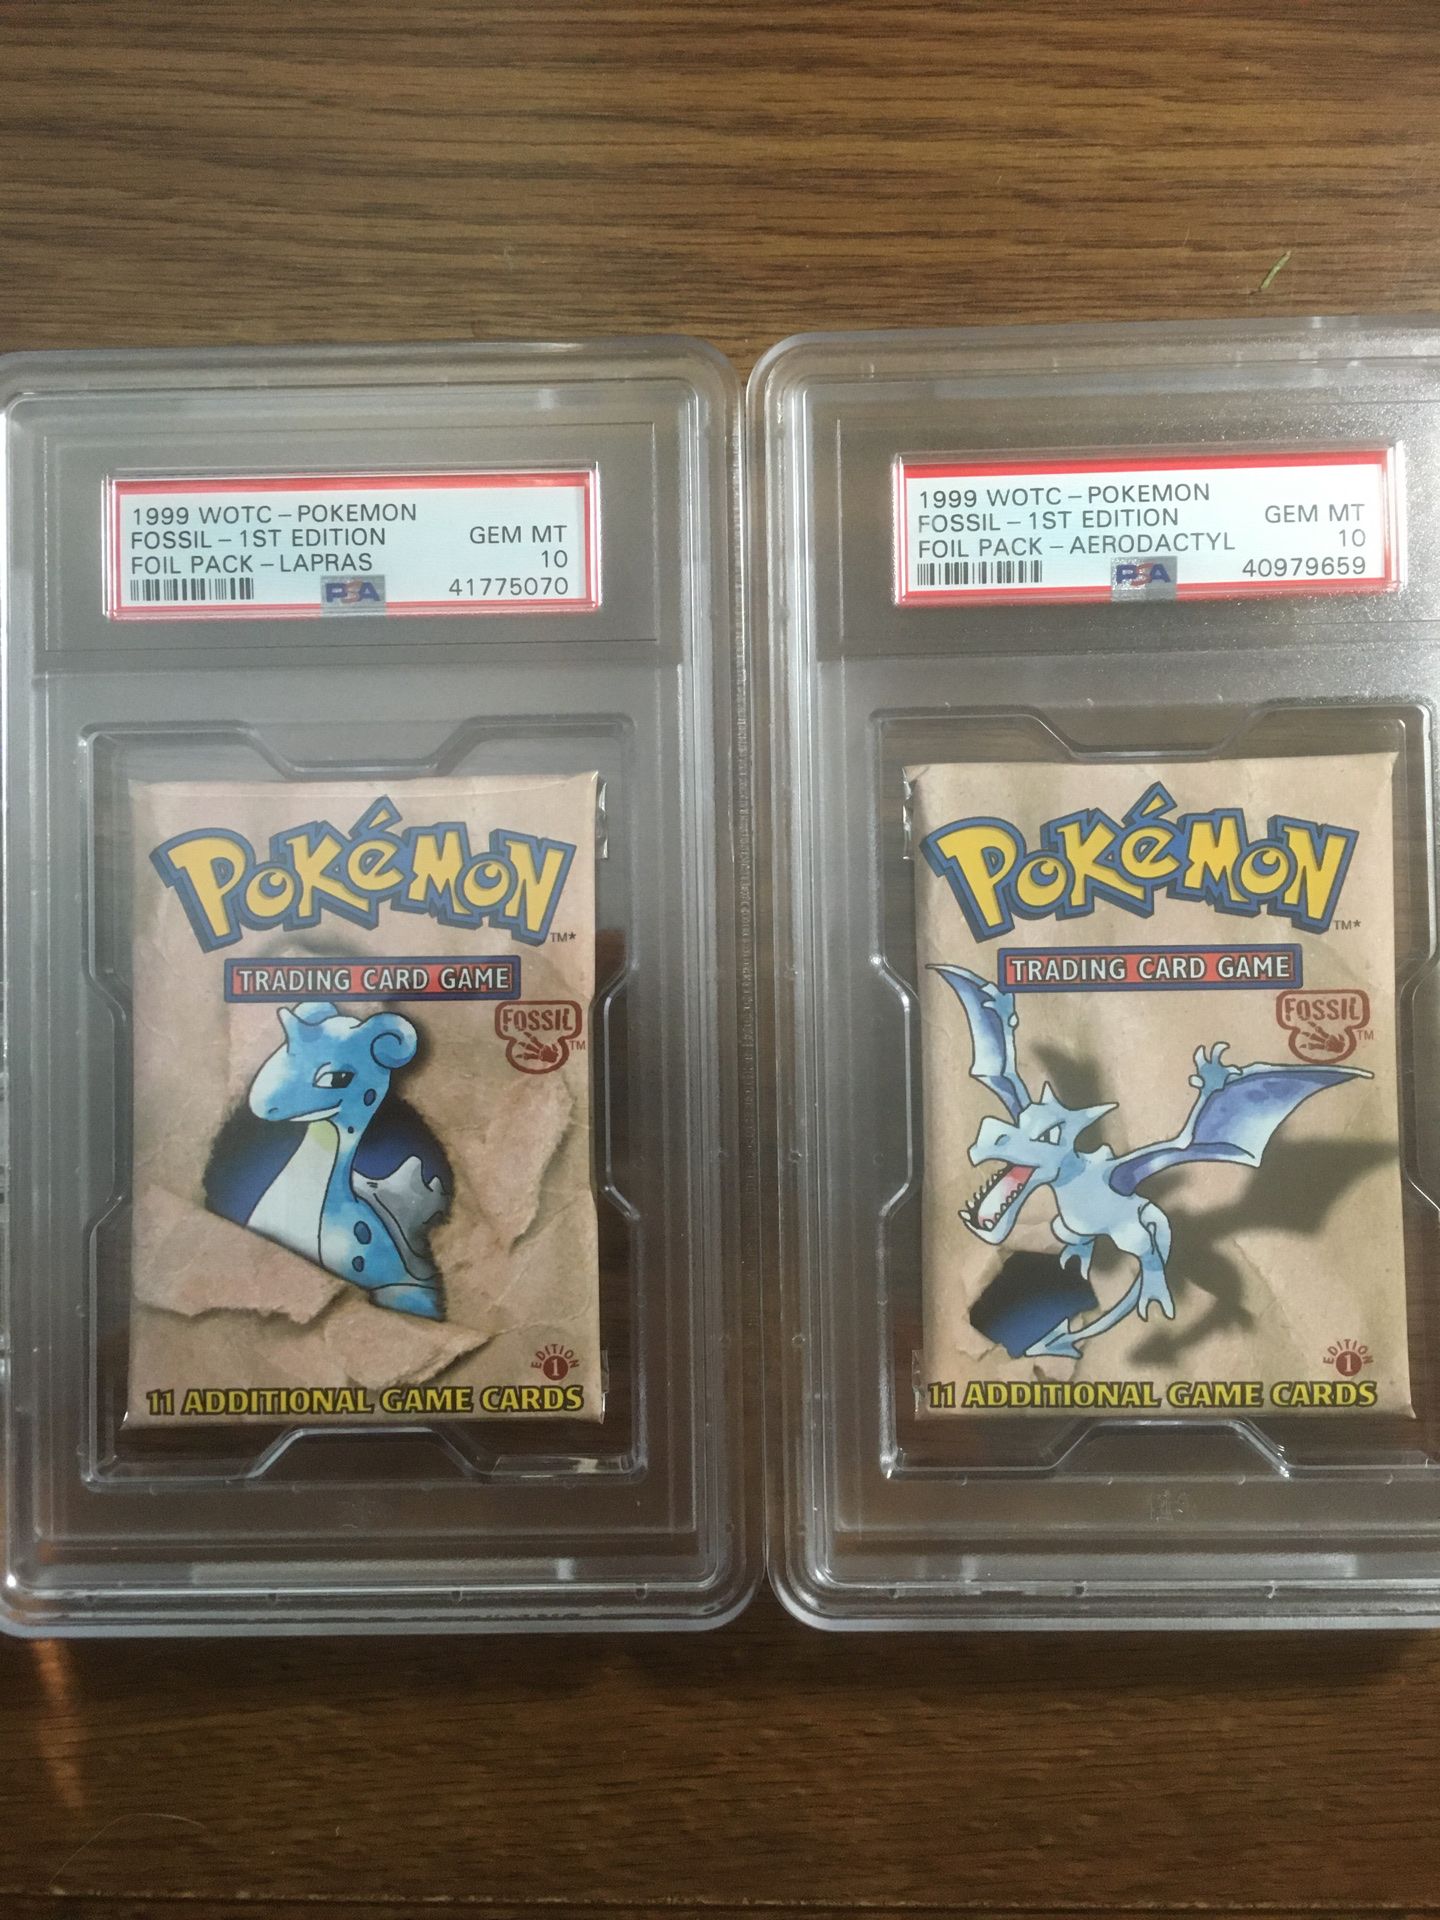 2 PSA 10 GEM MINT: Pokemon 1st Edition Fossil Foil Packs